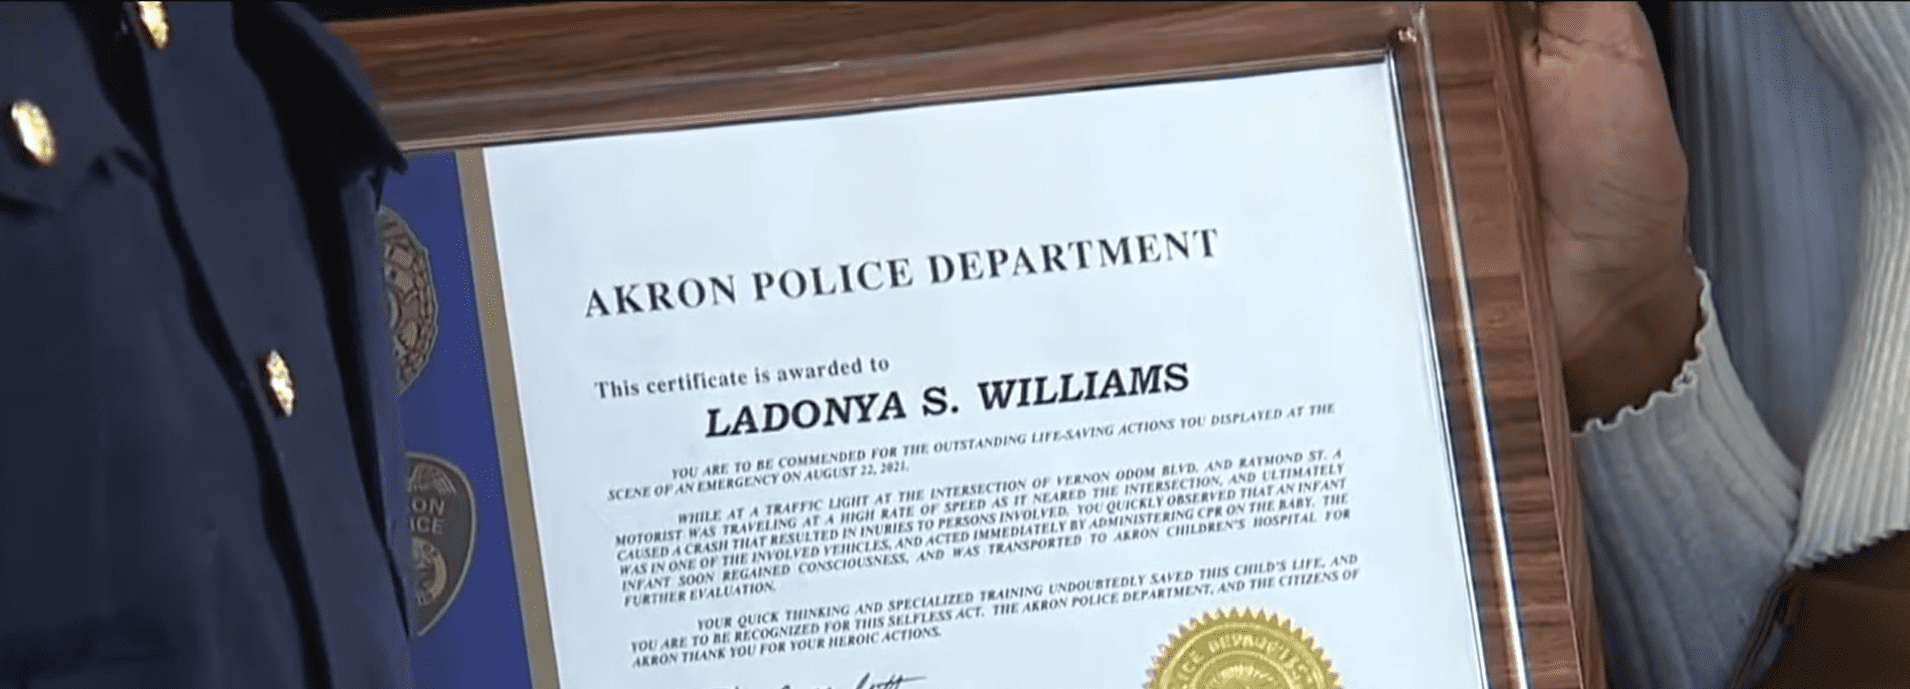 Ladonya Williams citizen’s award.┃Source:youtube.com/News 5 Cleveland